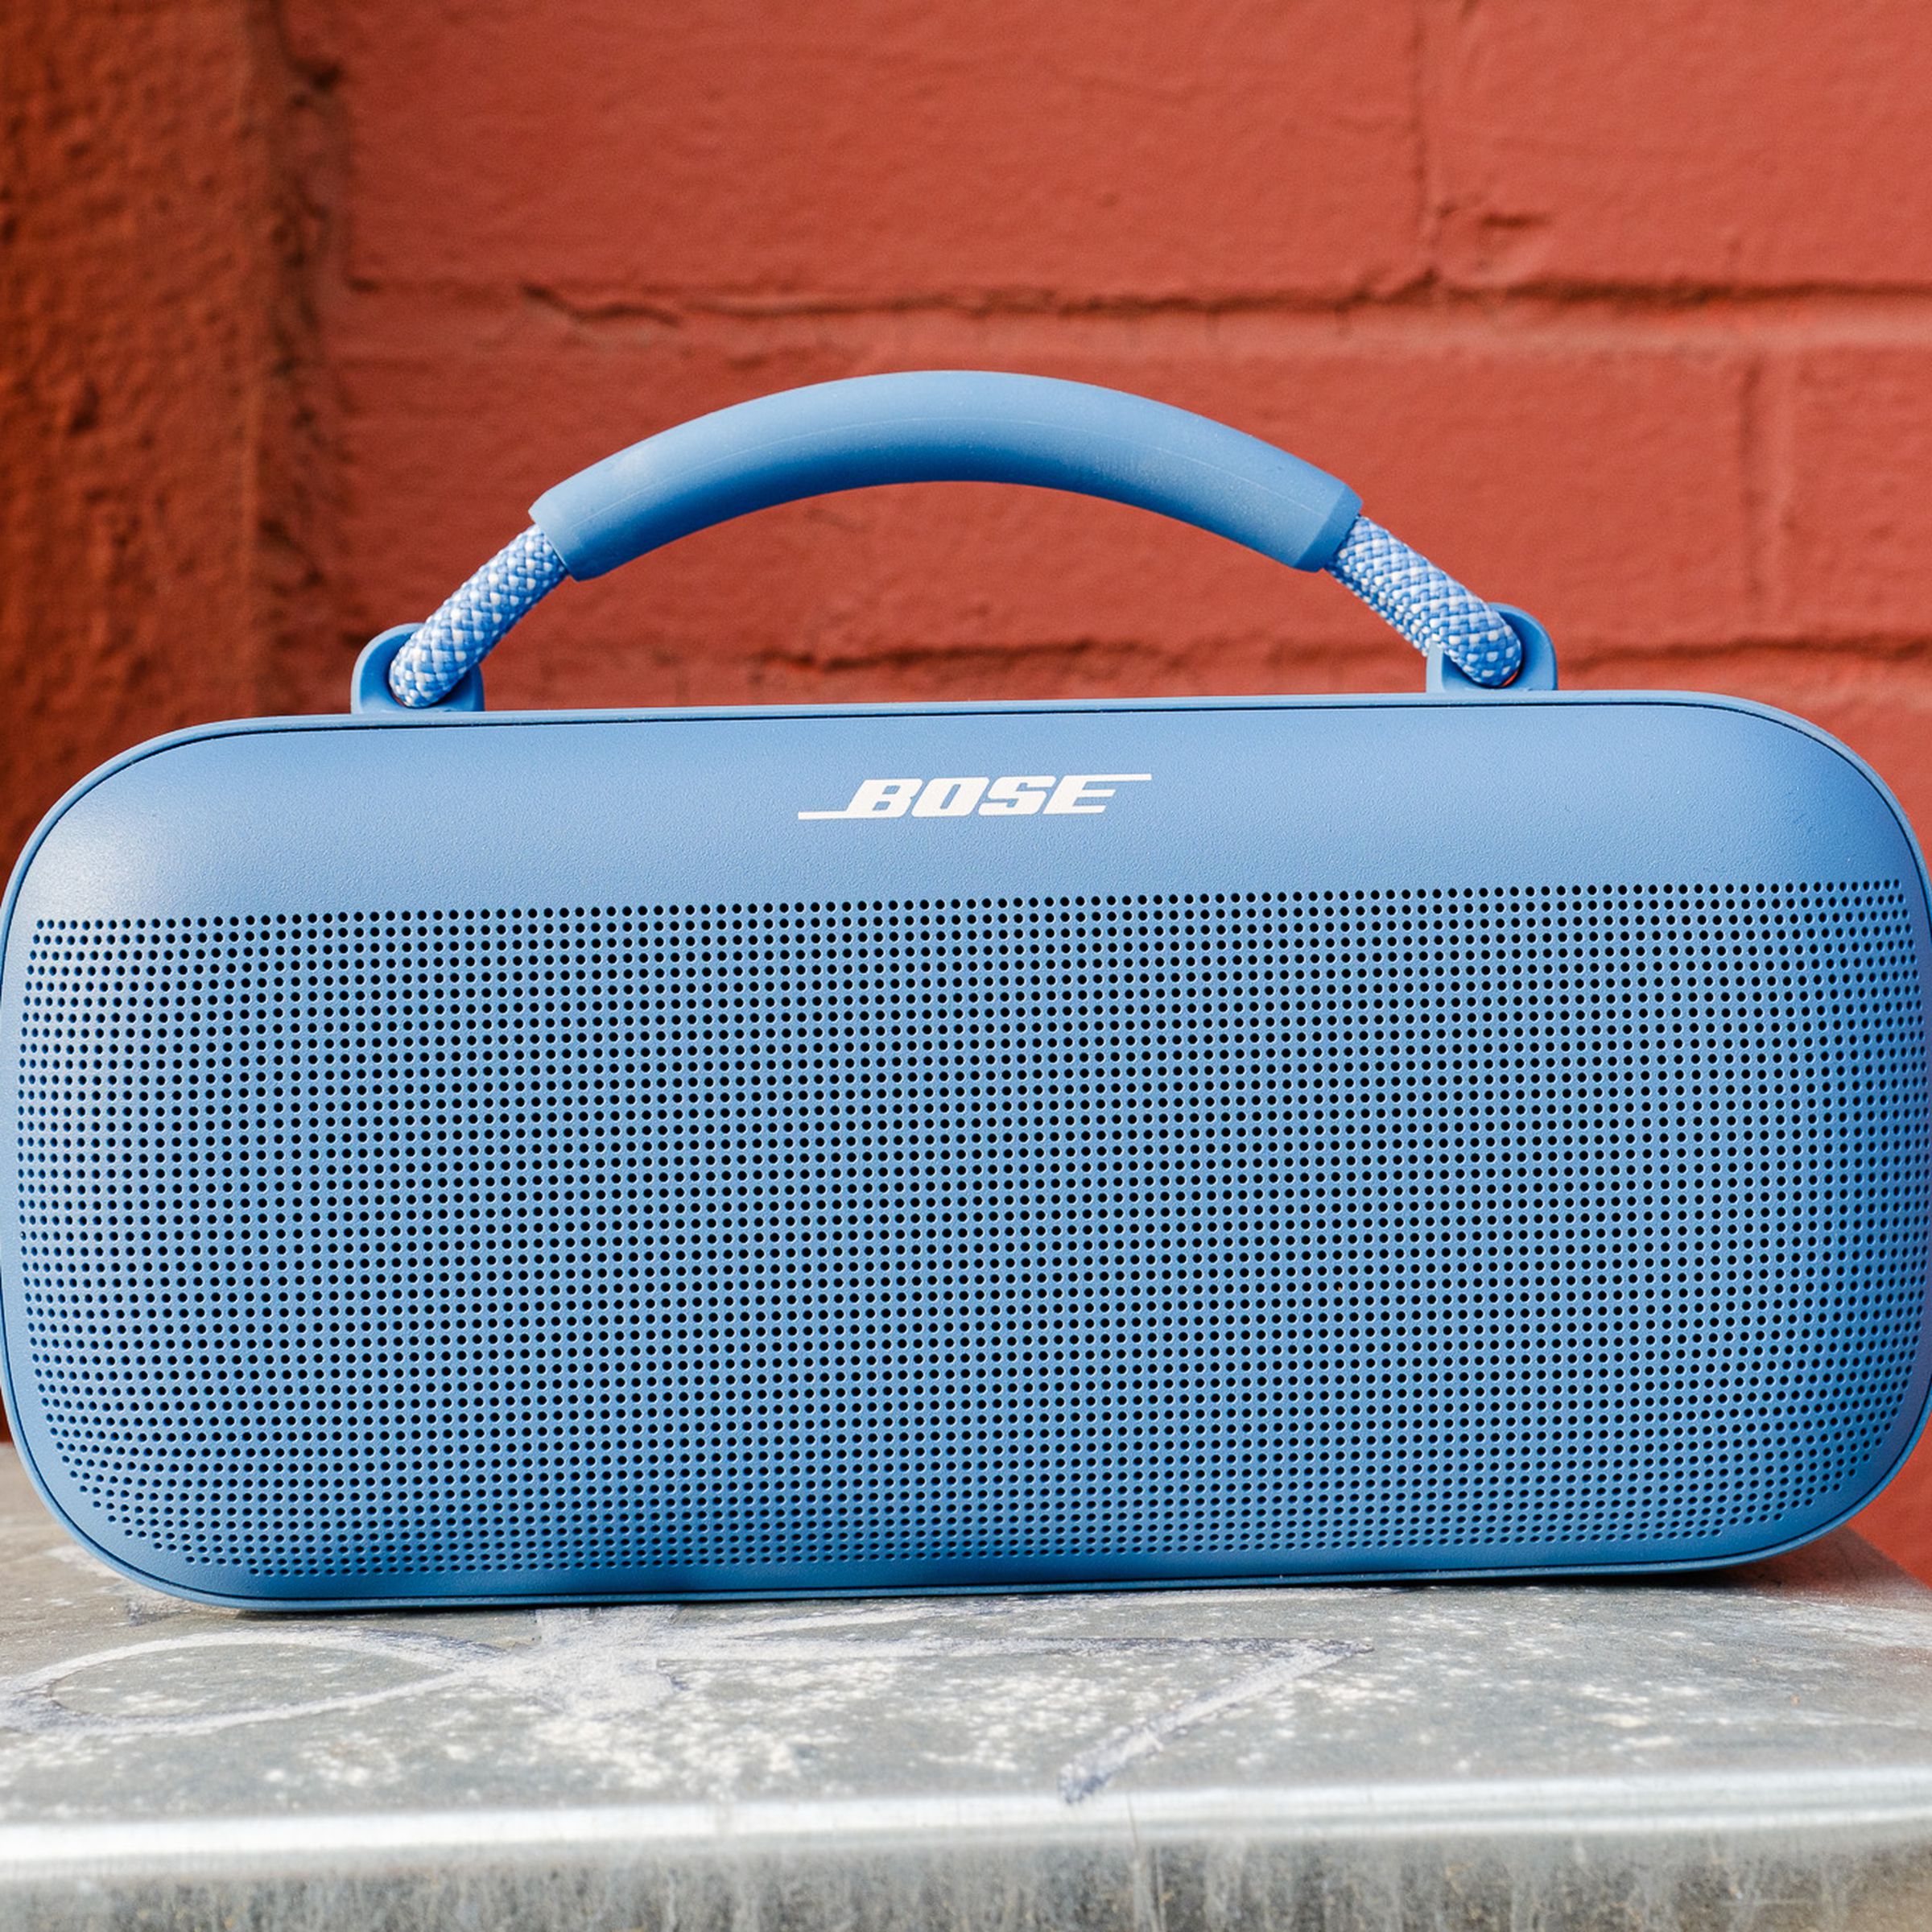 A photo of Bose’s blue SoundLink Max portable speaker.